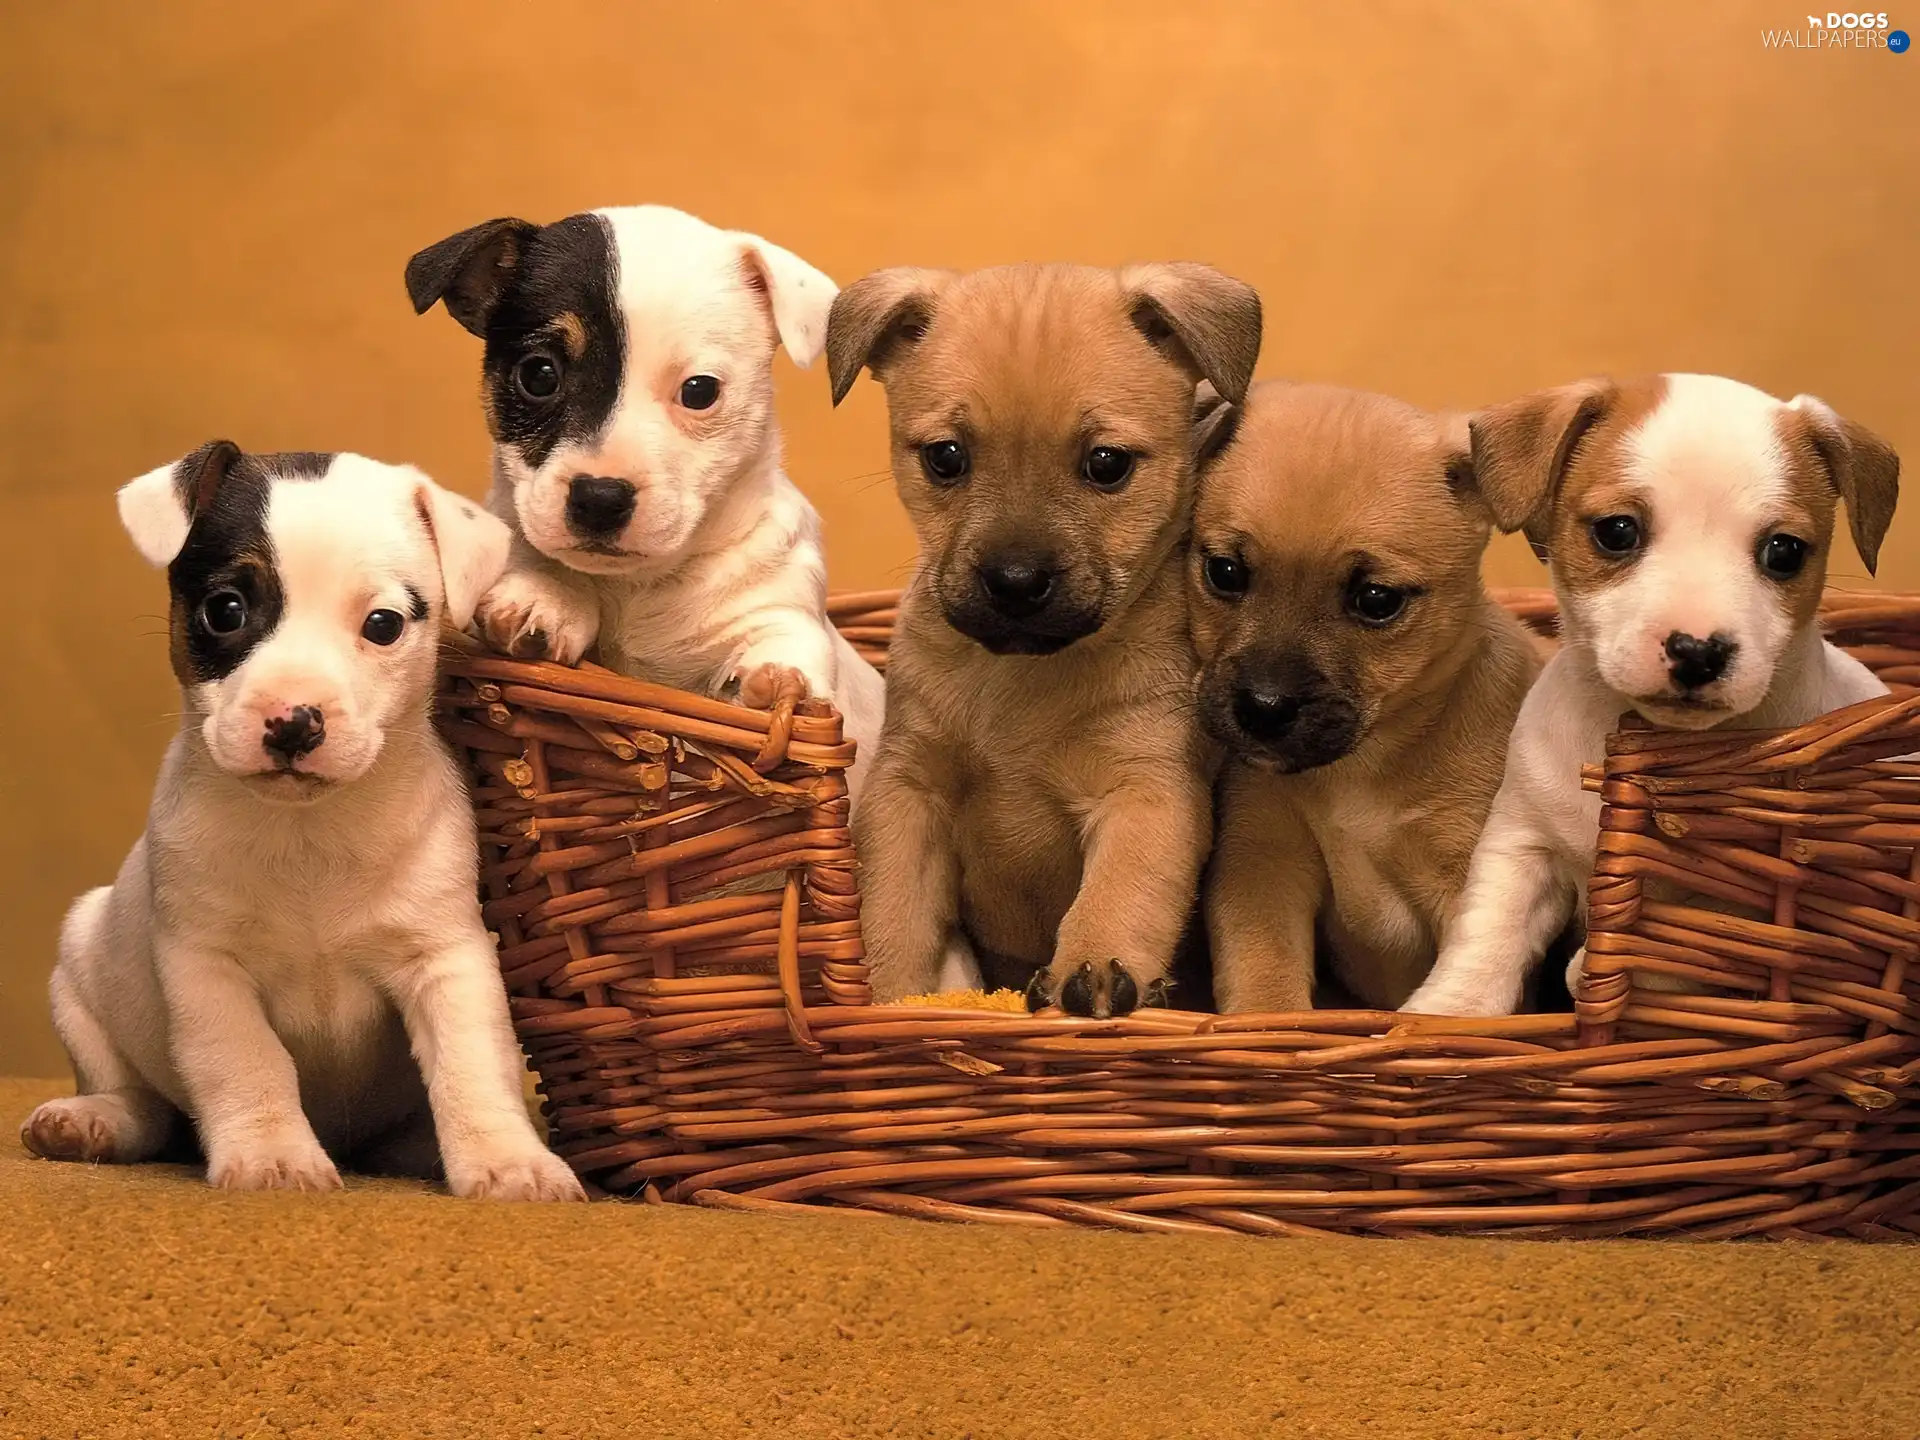 full, puppy, basket